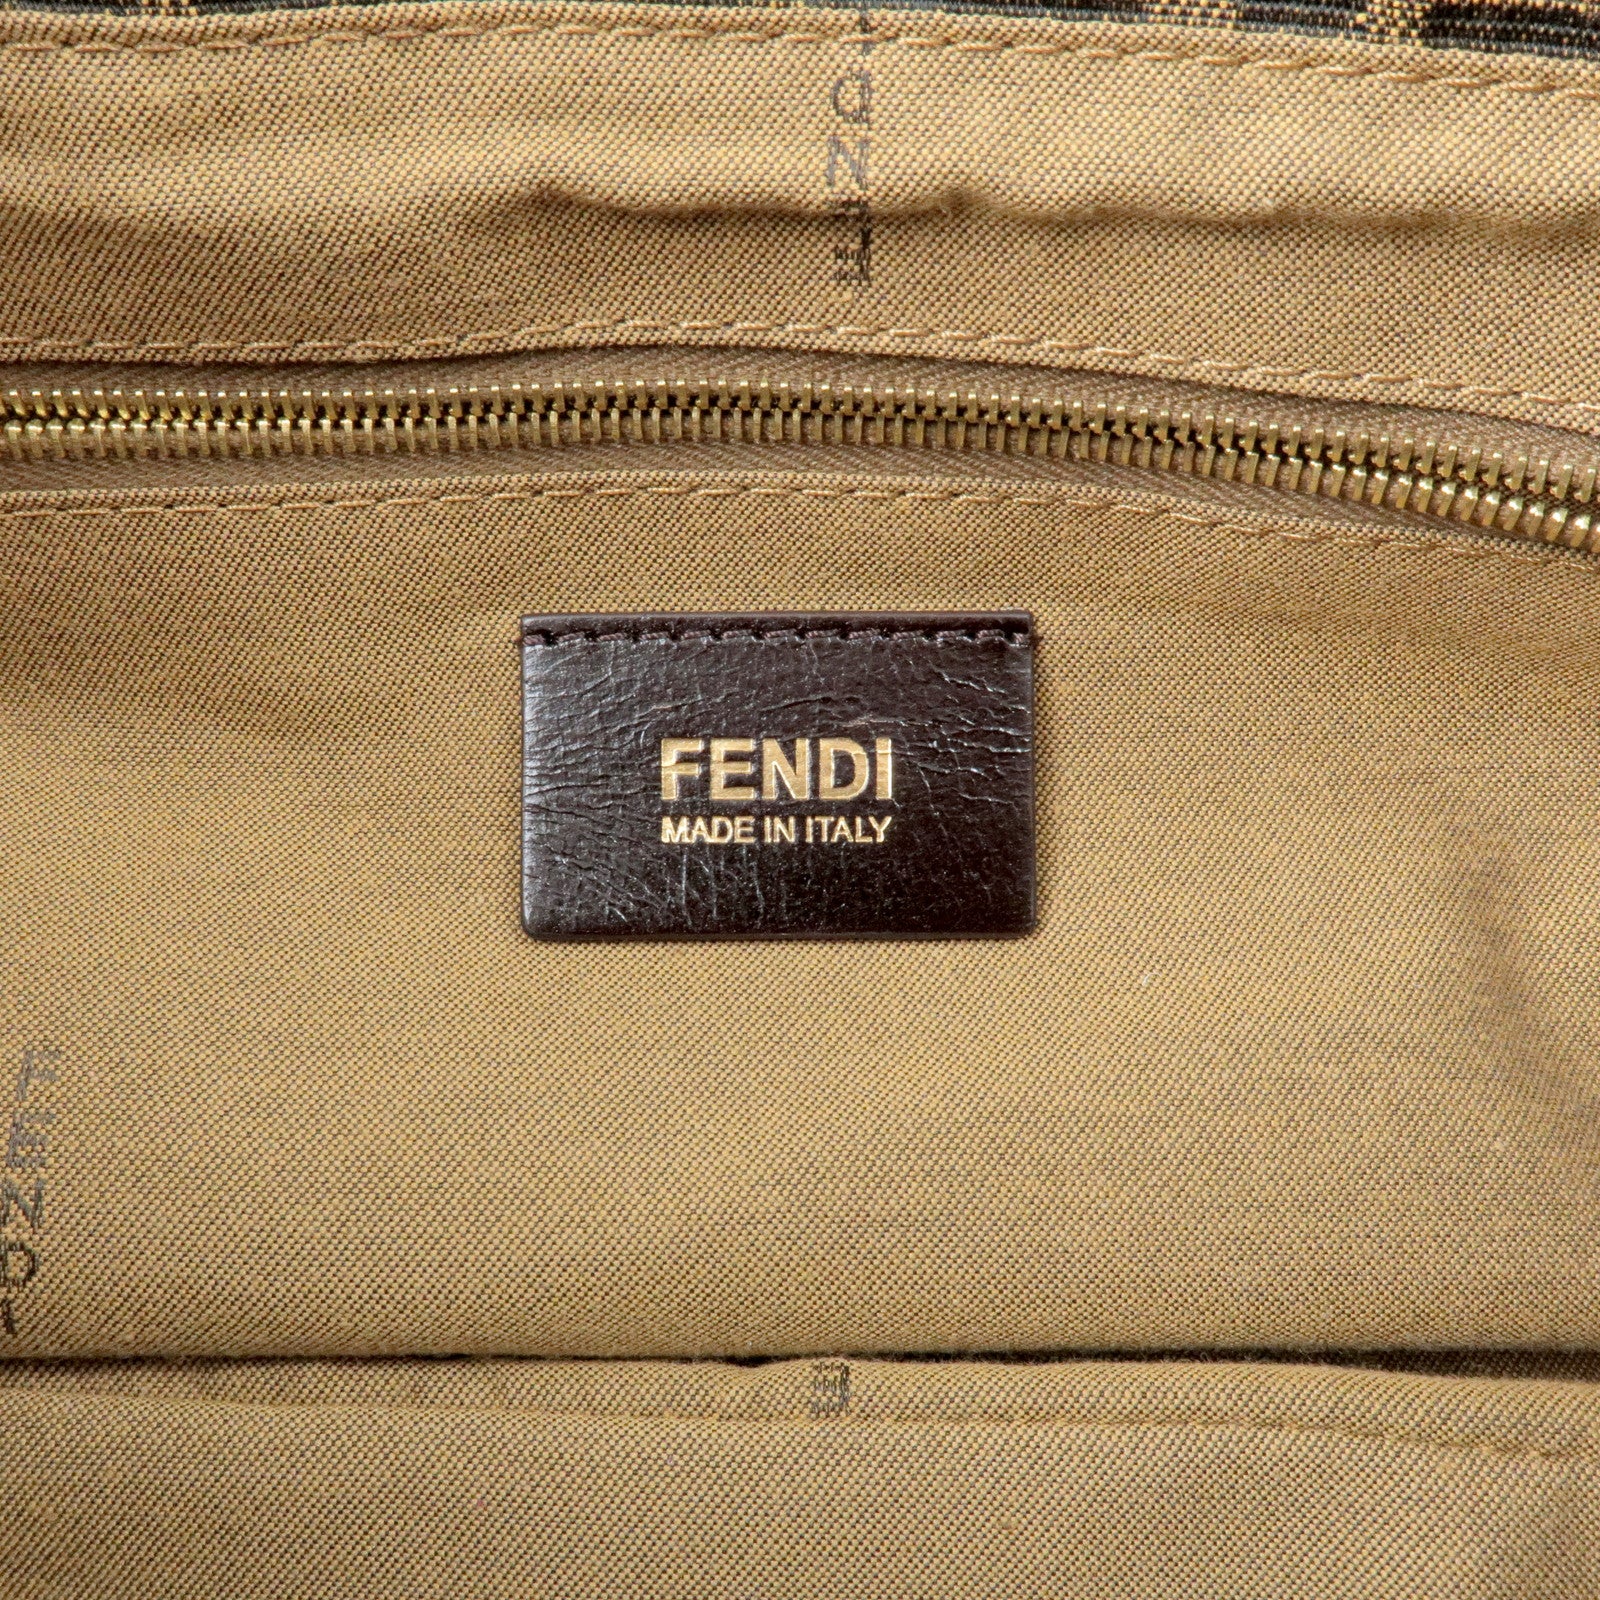 8BR436 – dct - Khaki - Zucca - FENDI - Bag - ep_vintage luxury Store - Brown fendi ff logo sandals item - Leather - Shoulder - Canvas